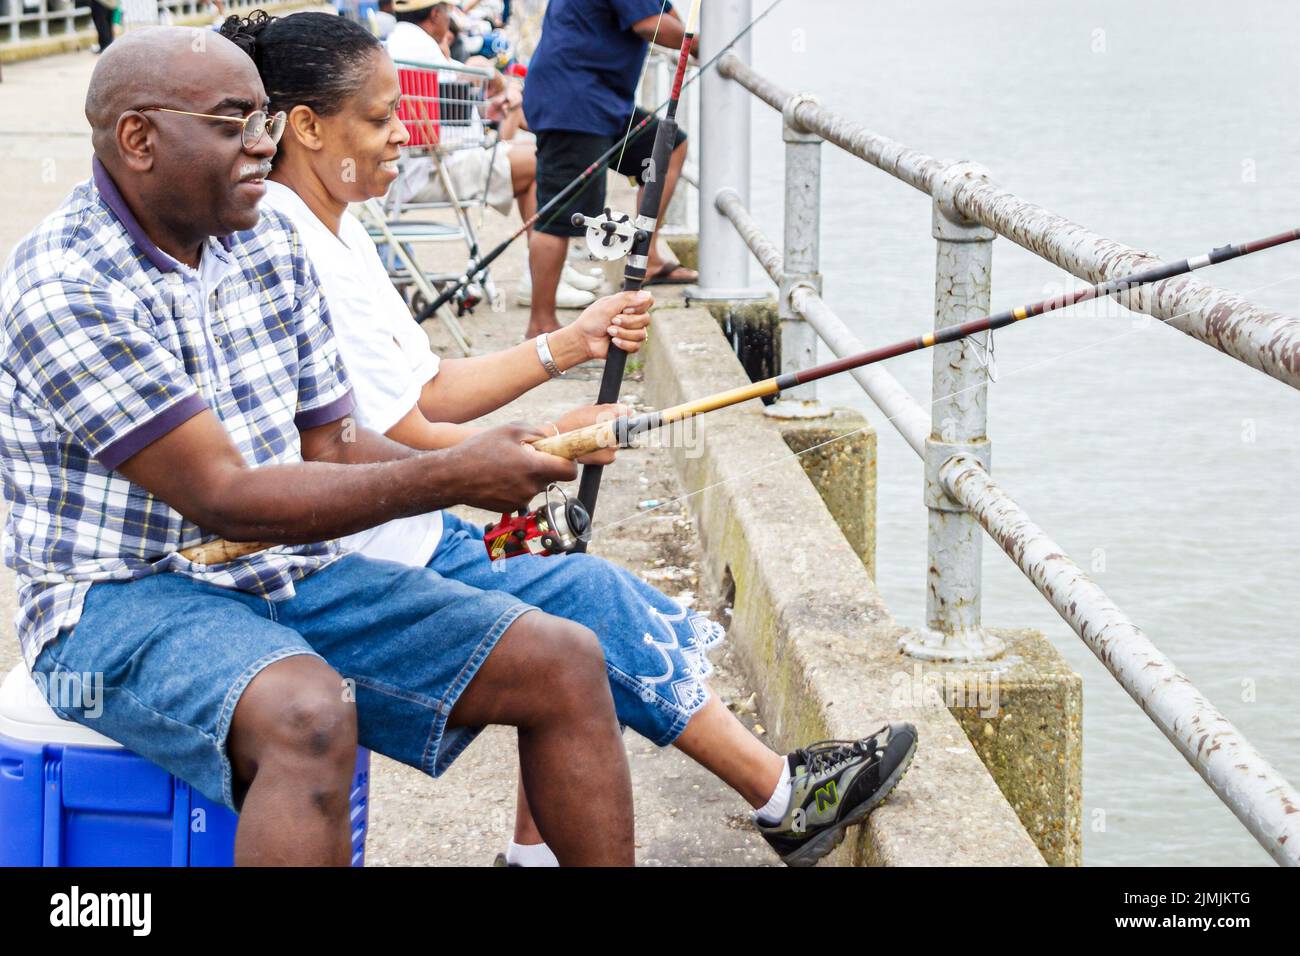 Virginia Newport News near James River Bridge,fishing recreation water dock pier couple Black man woman,visitors people person scene in a photo Stock Photo